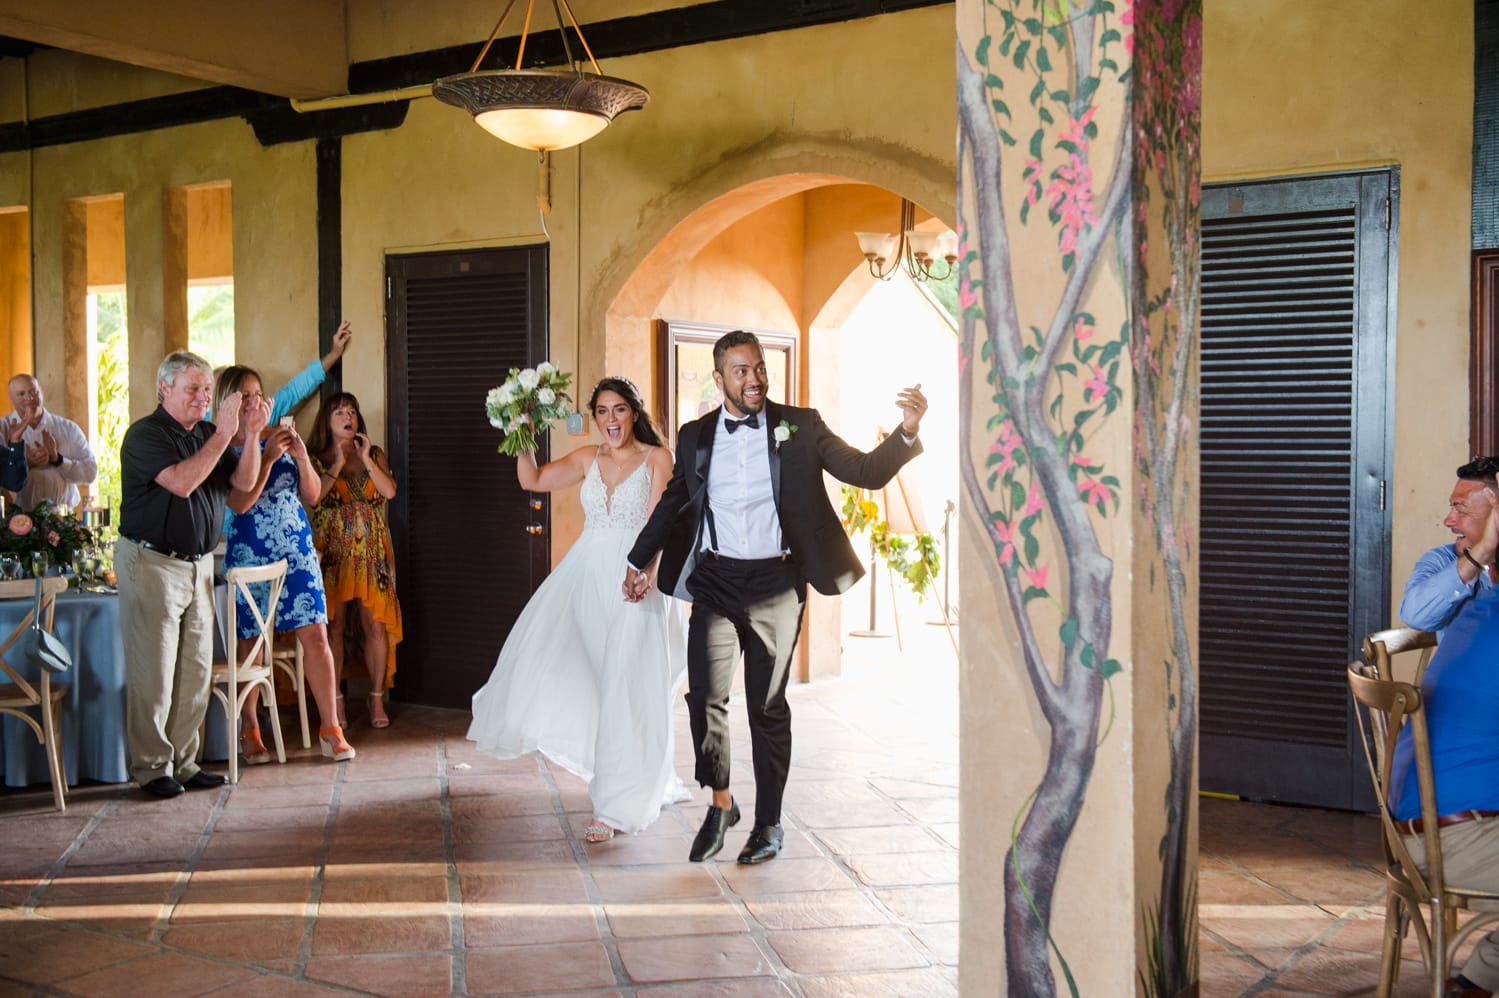 Puerto Rico photographer Camille Fontanez shares a beautiful destination wedding at Hacienda Campo Rico